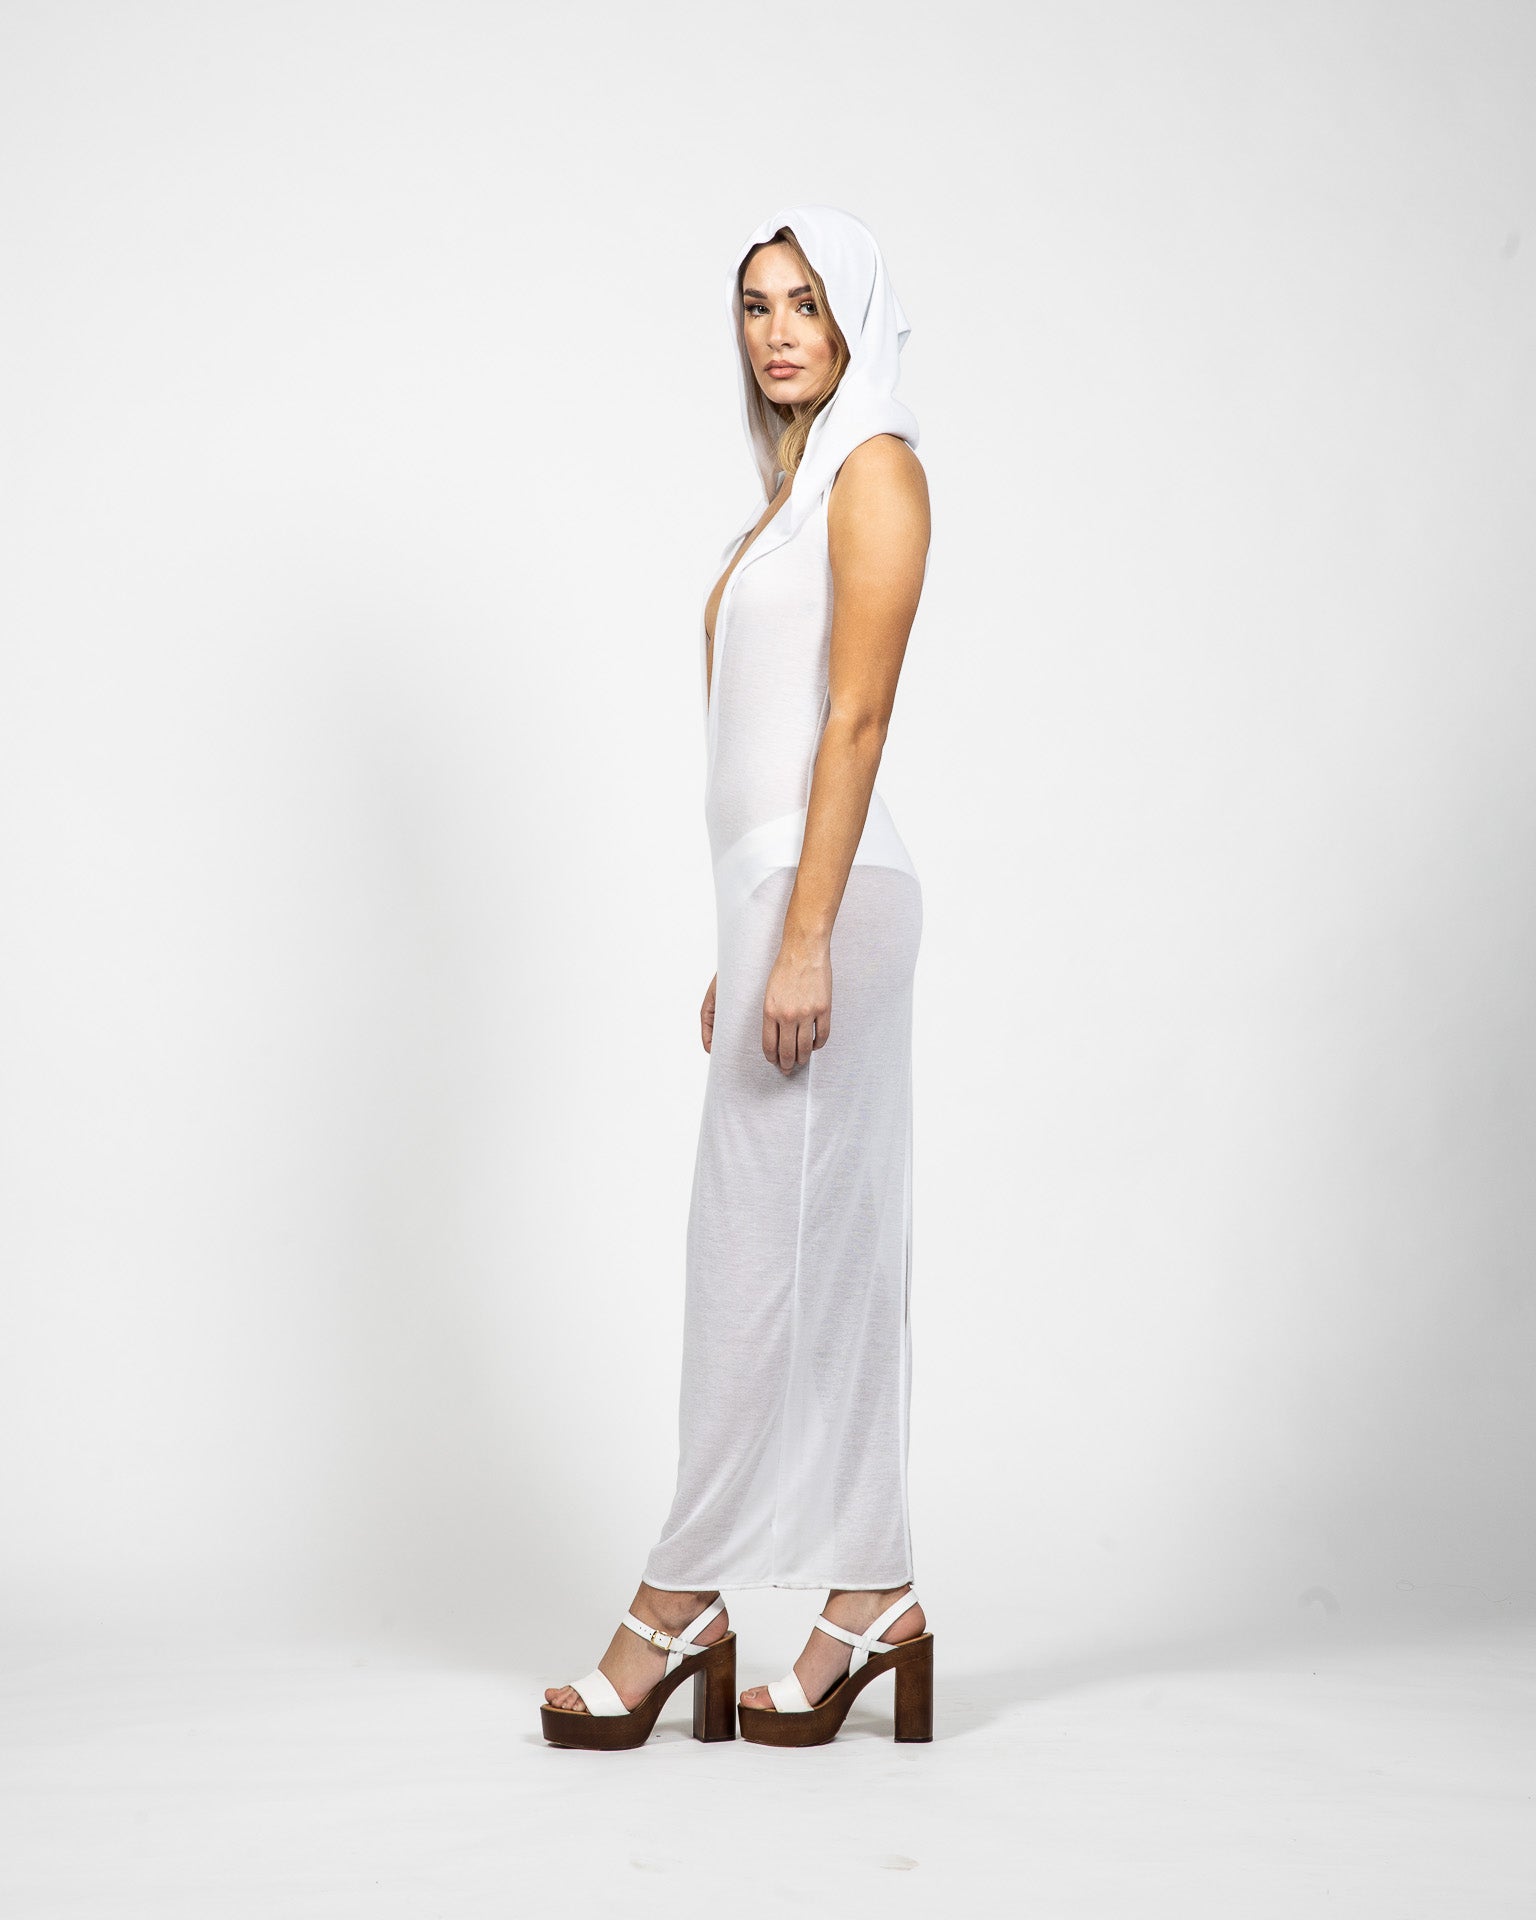 Long White Sleeveless Dress With Hood - 3/4th View - Samuel Vartan